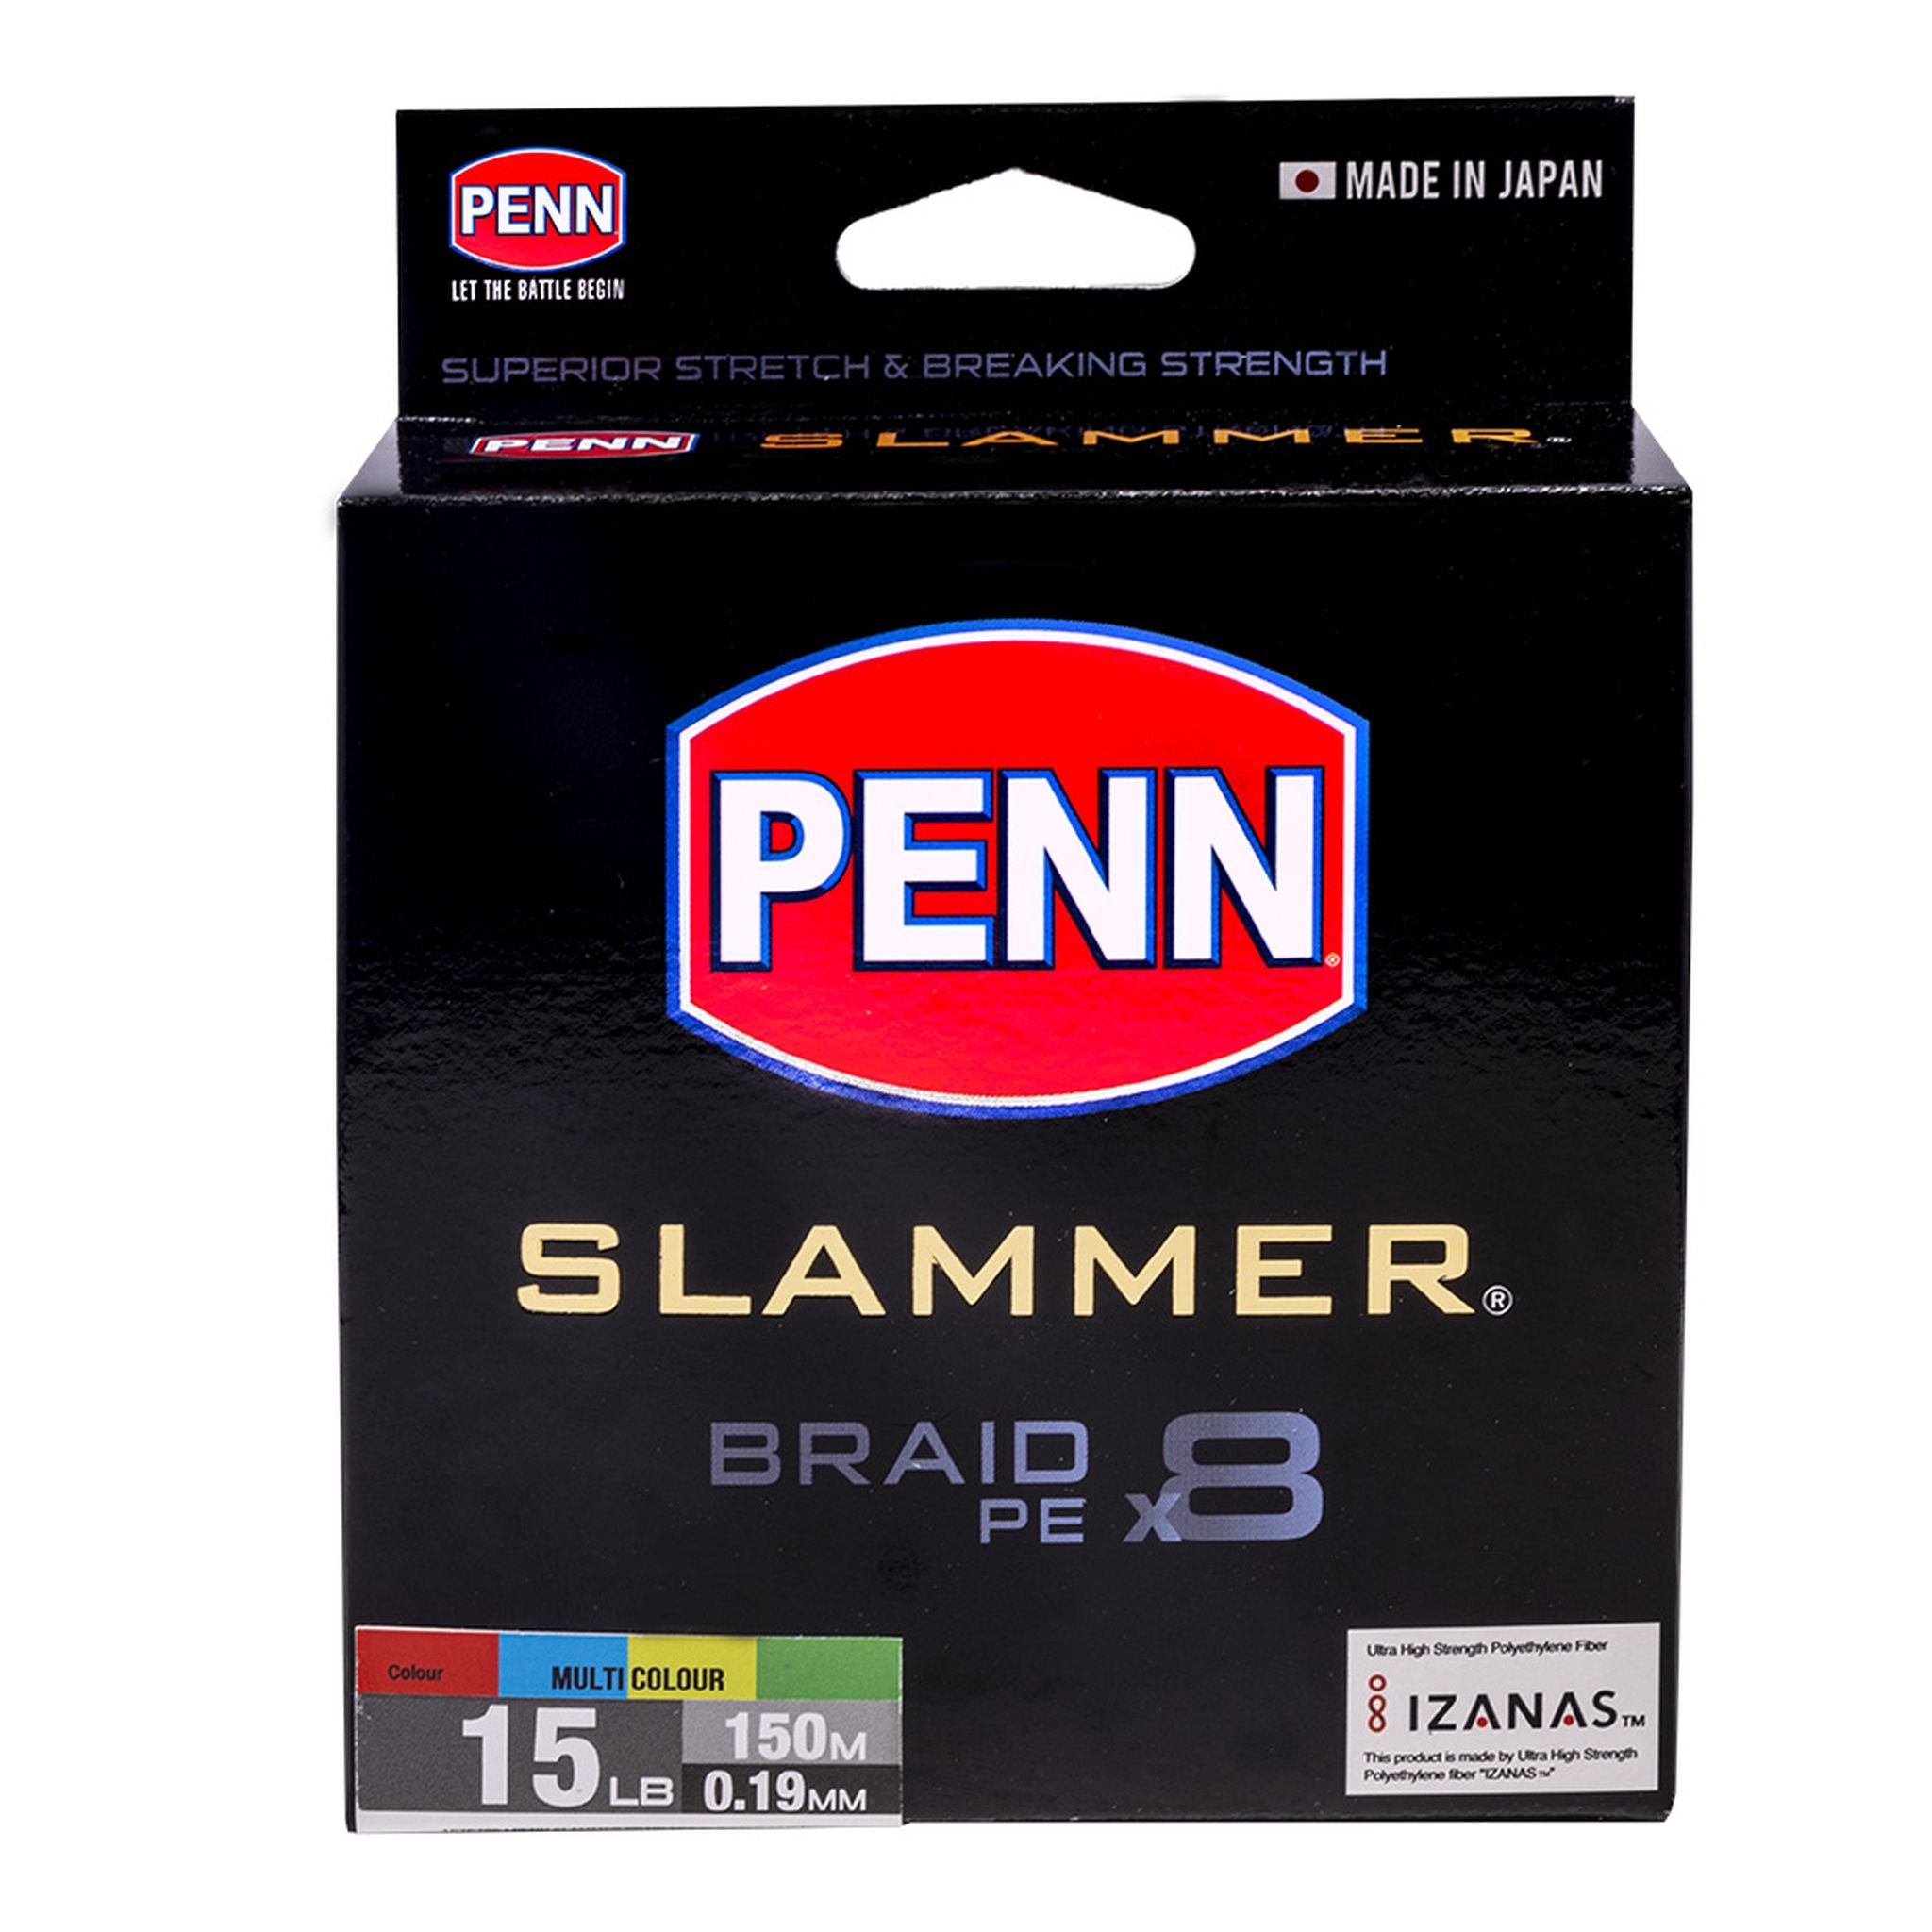 Penn Slammer X8 Braid Fishing Line 150m Multi